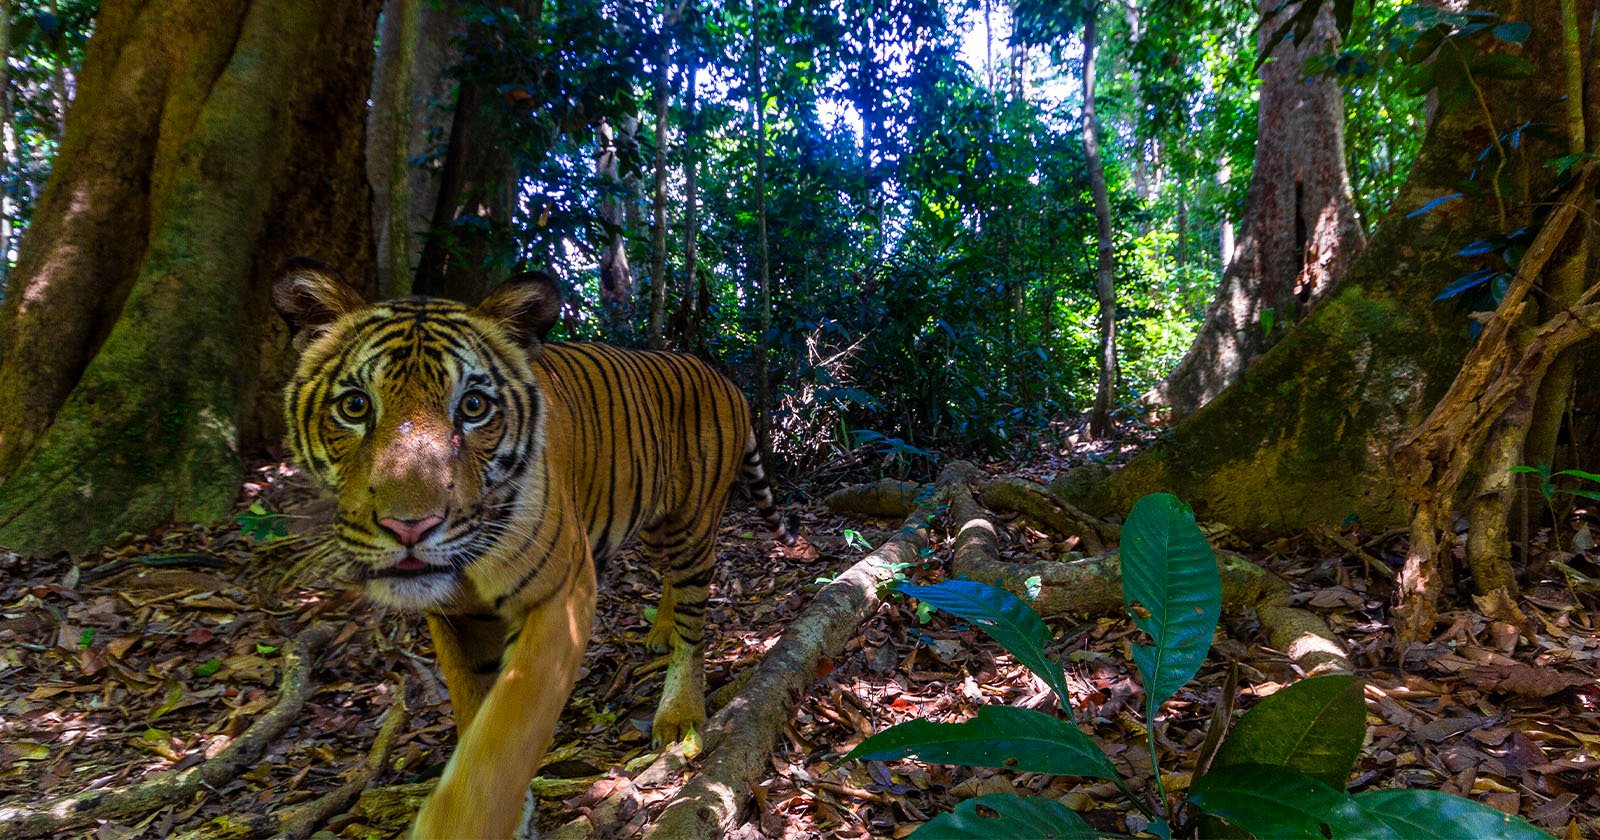 A Malayan tiger captured using a camera trap.